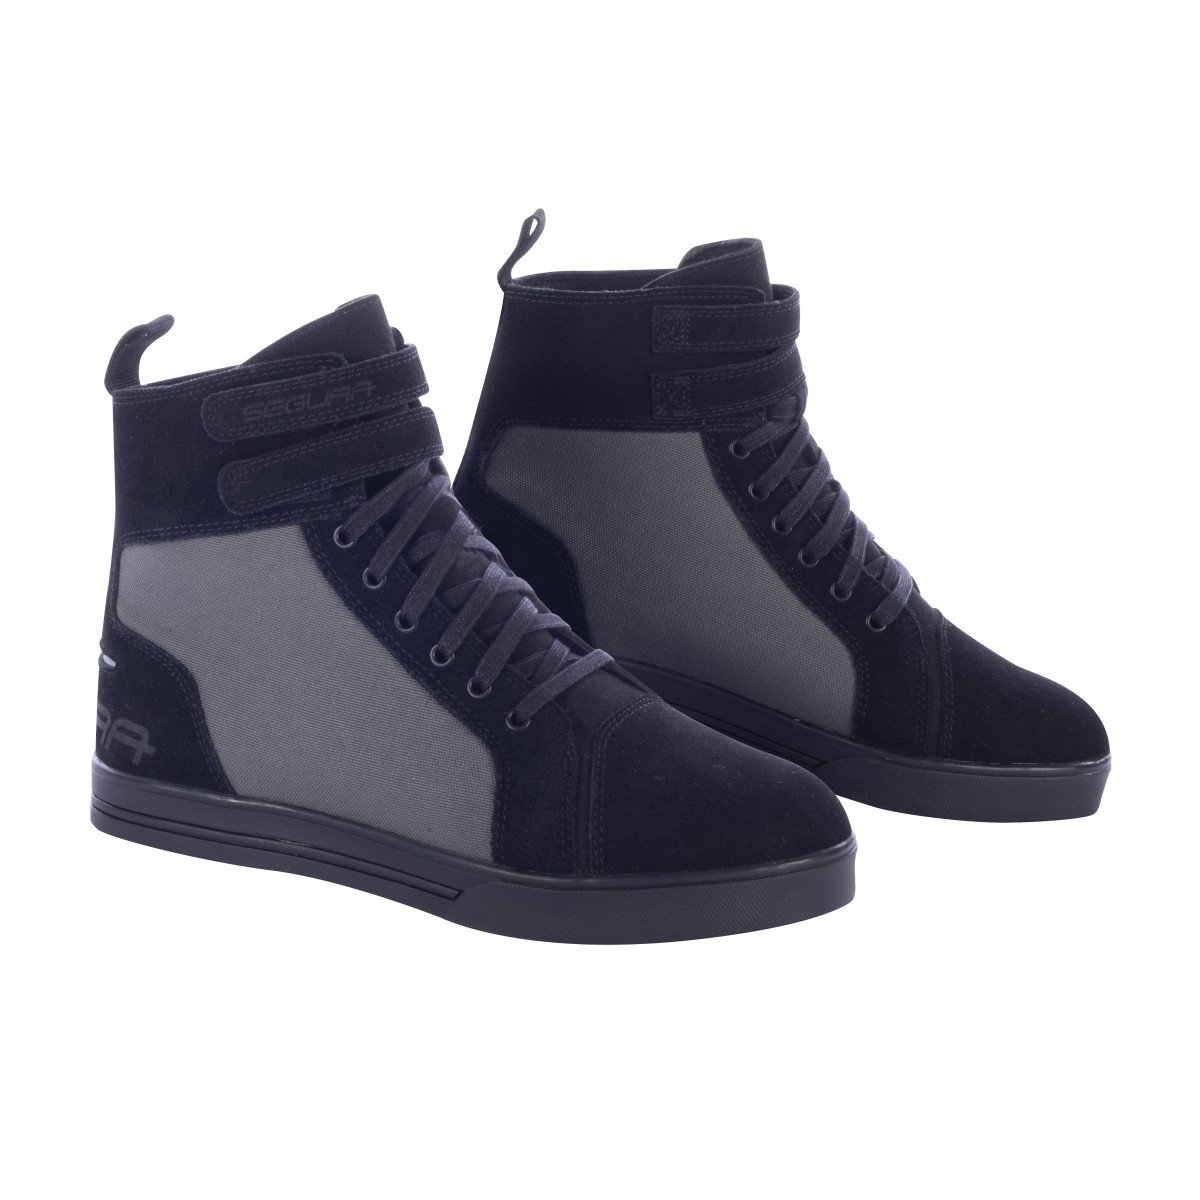 Image of Segura Sneakers Contact Black Grey Size 45 EN